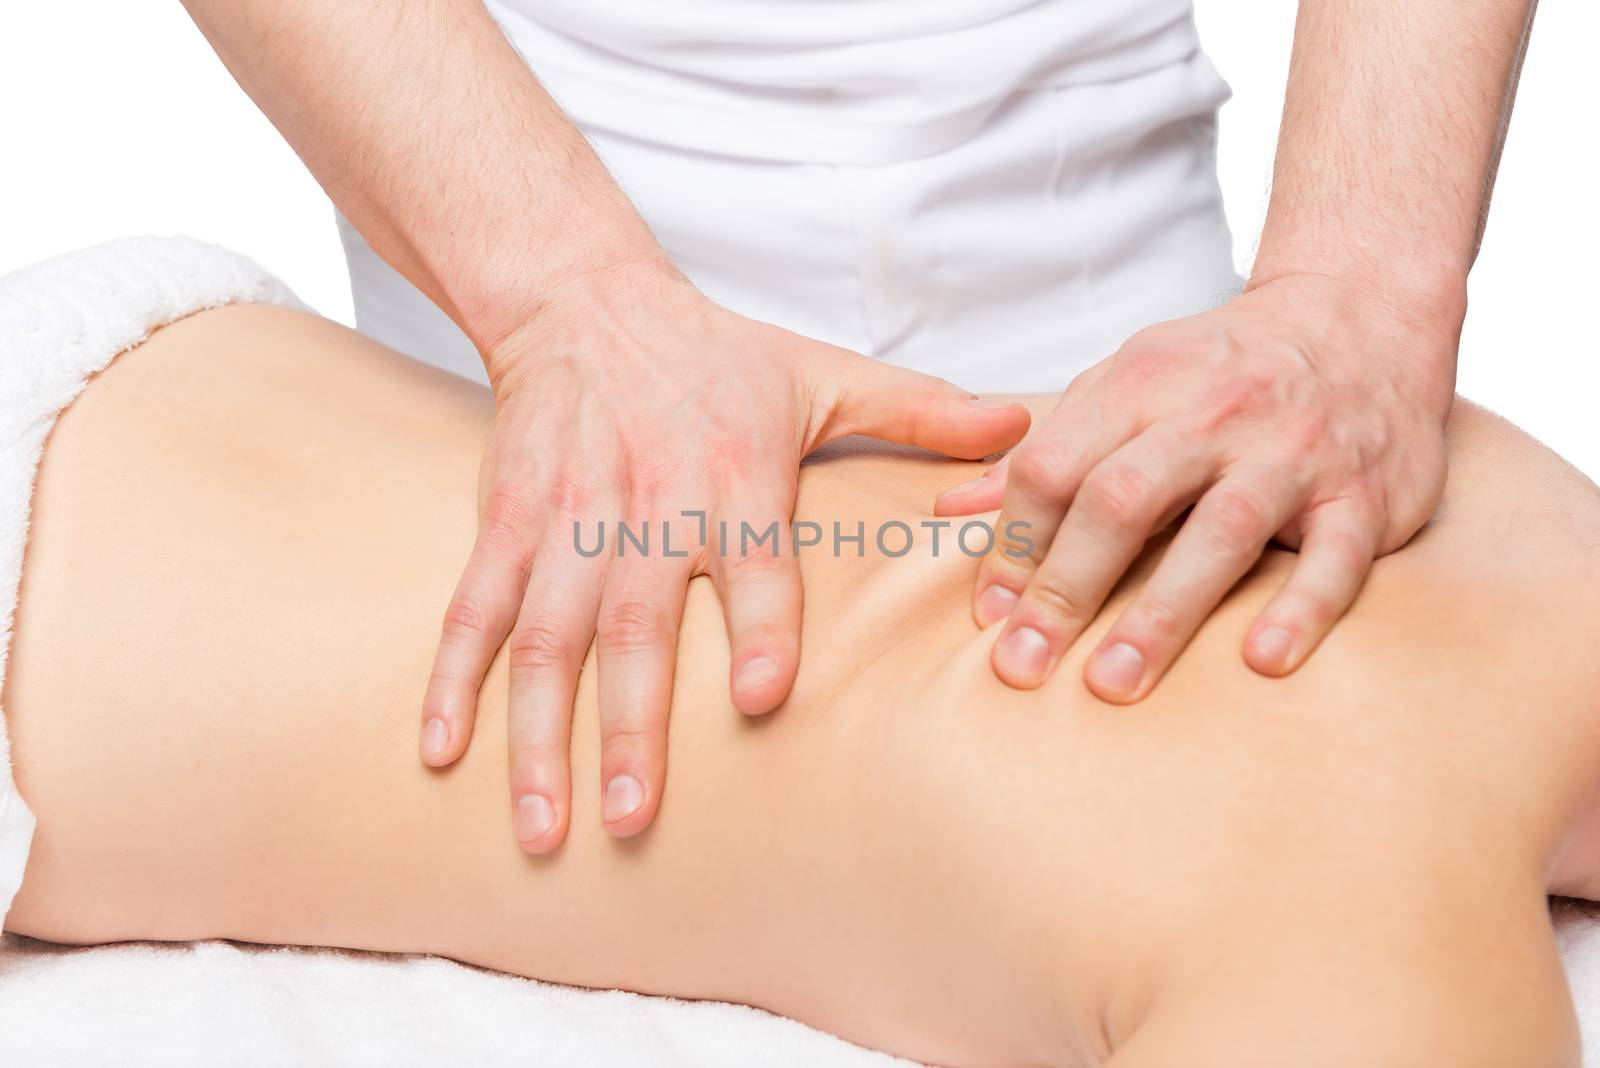 male masseur does back massage on a massage table